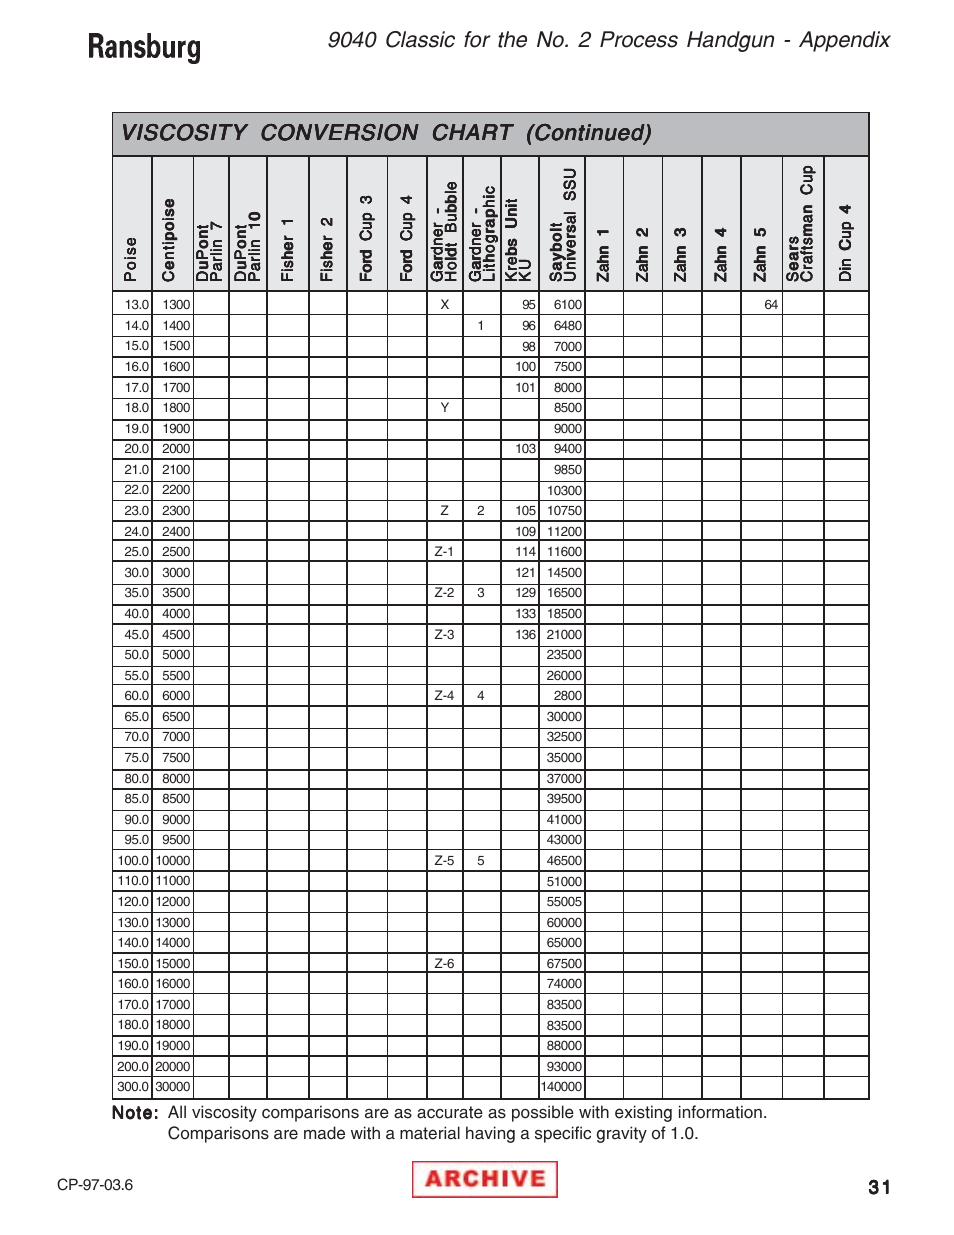 Viscosity conversion chart (continued) | Ransburg 9040 Classic Power Supply  _NO2 Gun 76657-14, -142 User Manual | Page 35 / 40